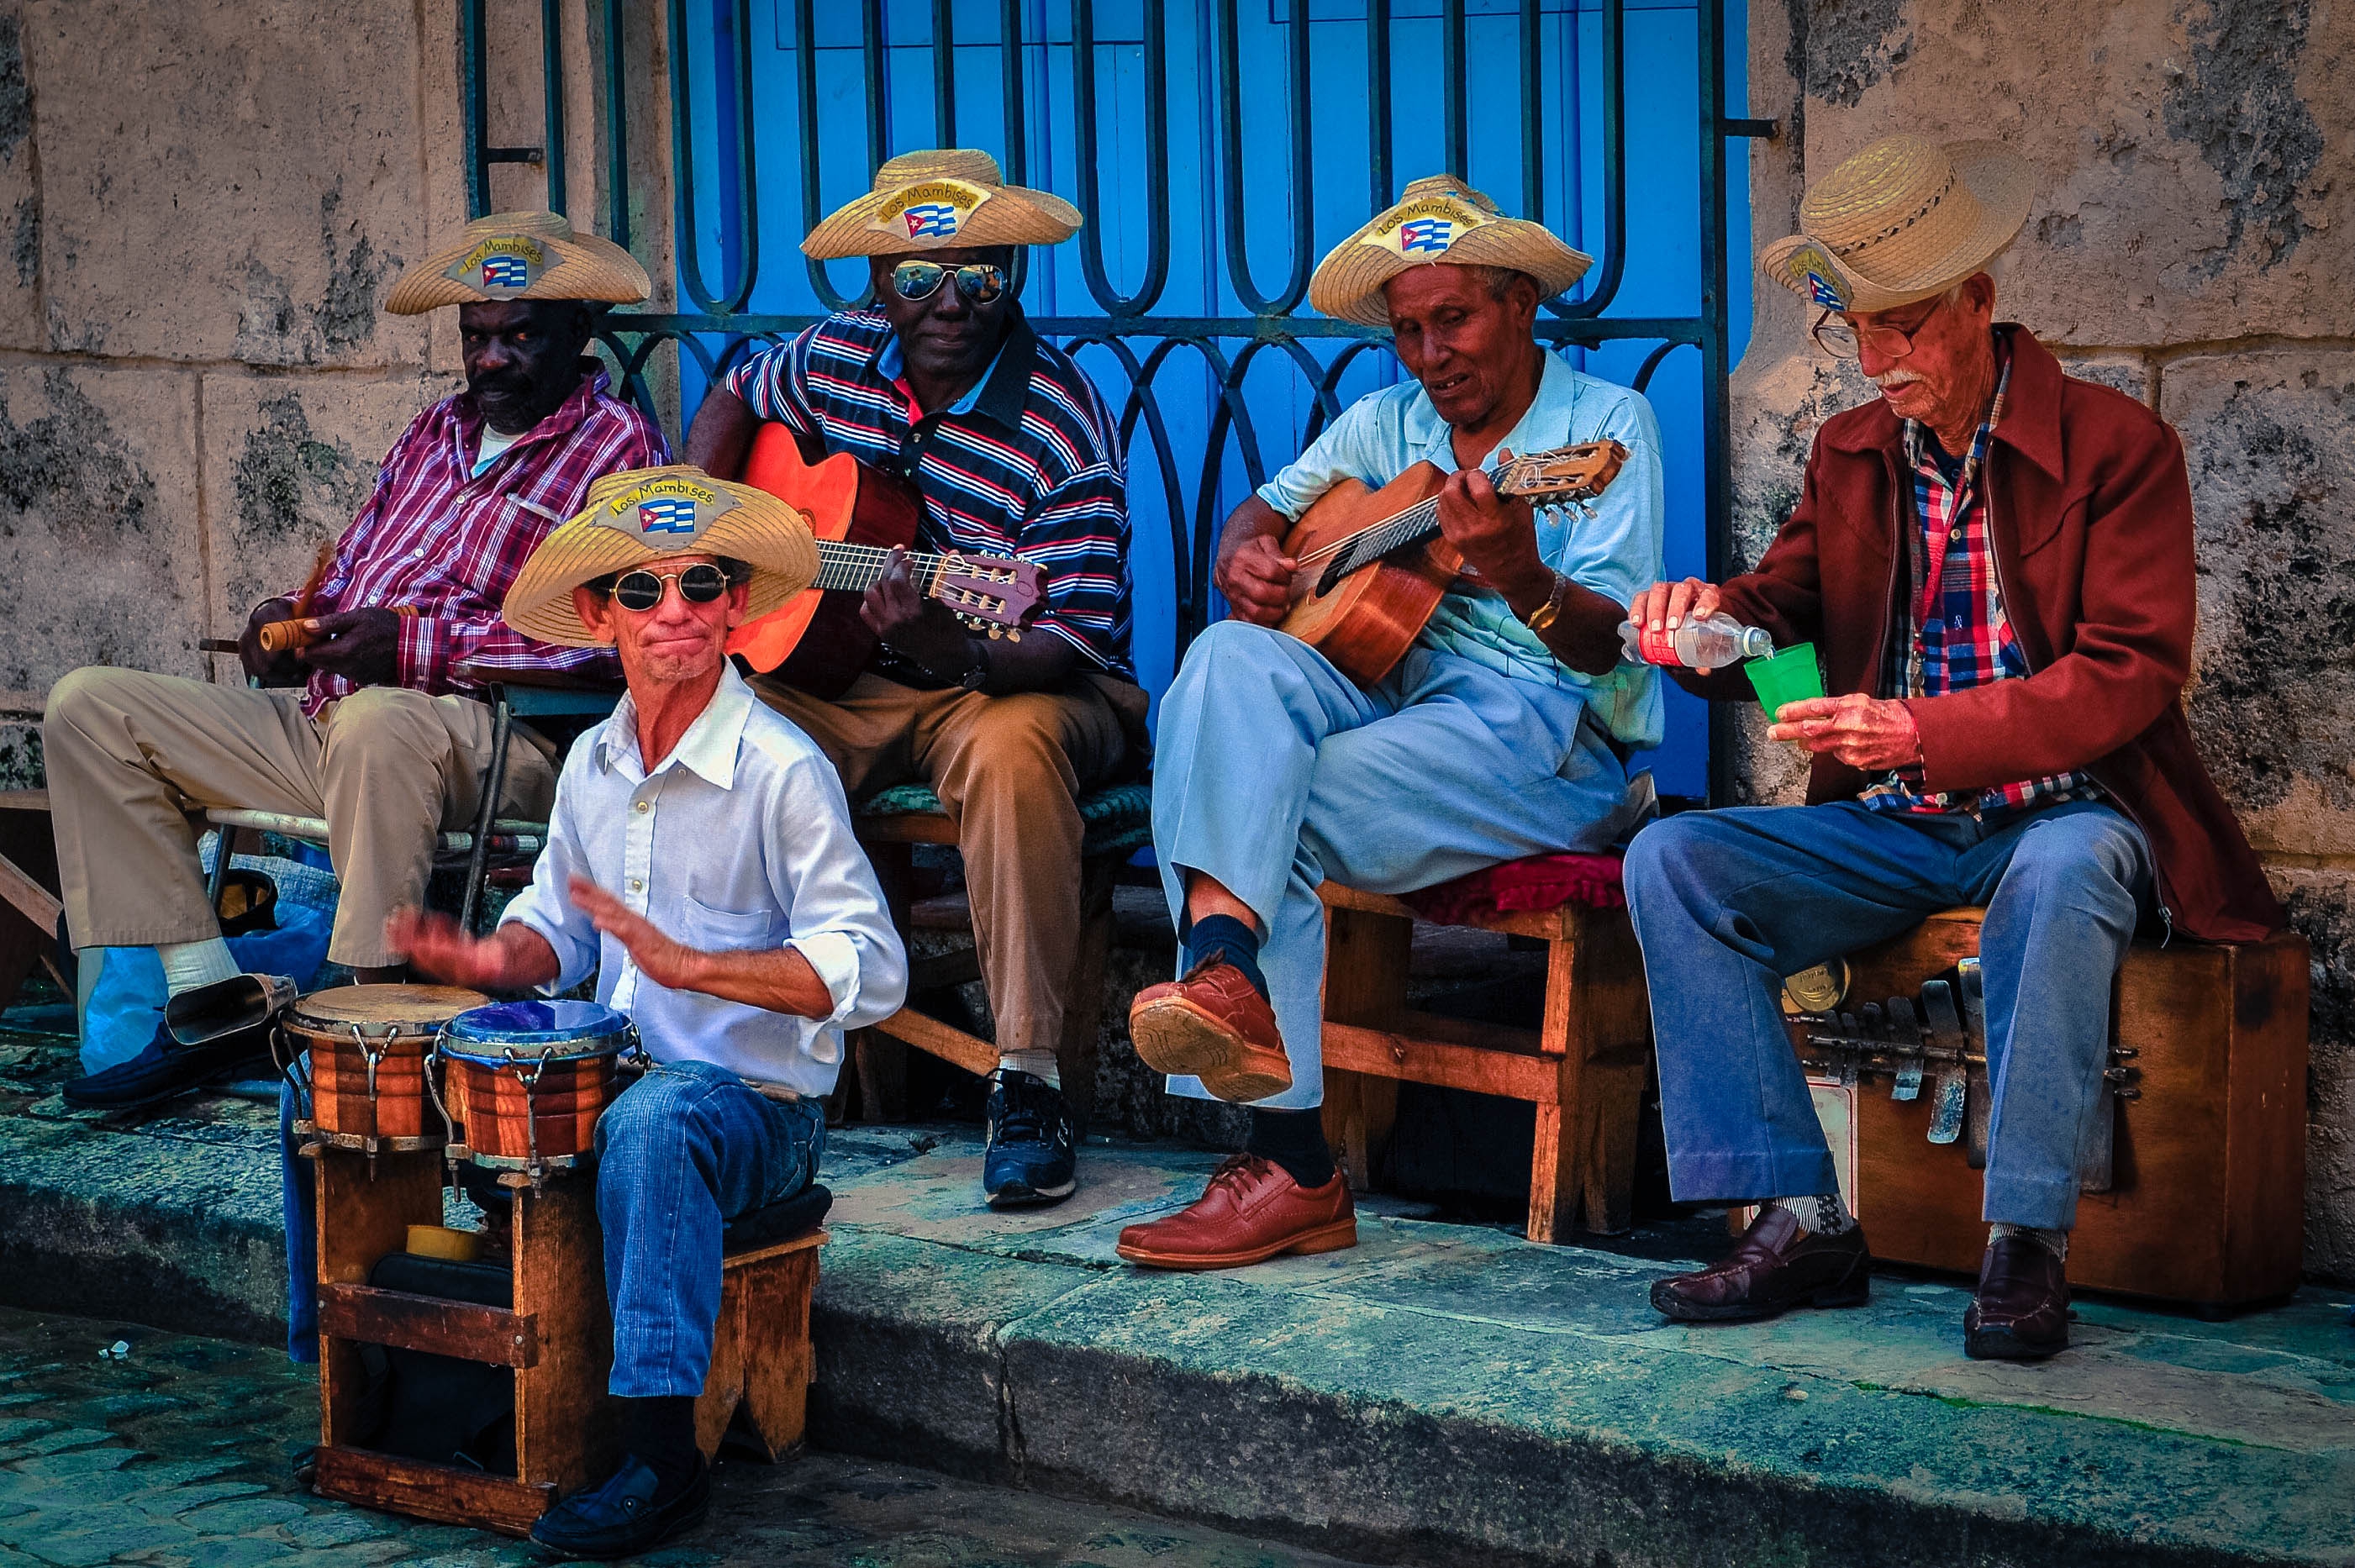 Покажи кубинские. Куба Гавана туризм. Куба Гавана колорит. Куба и кубинцы. Куба Гавана Ром сигары кубинцы.